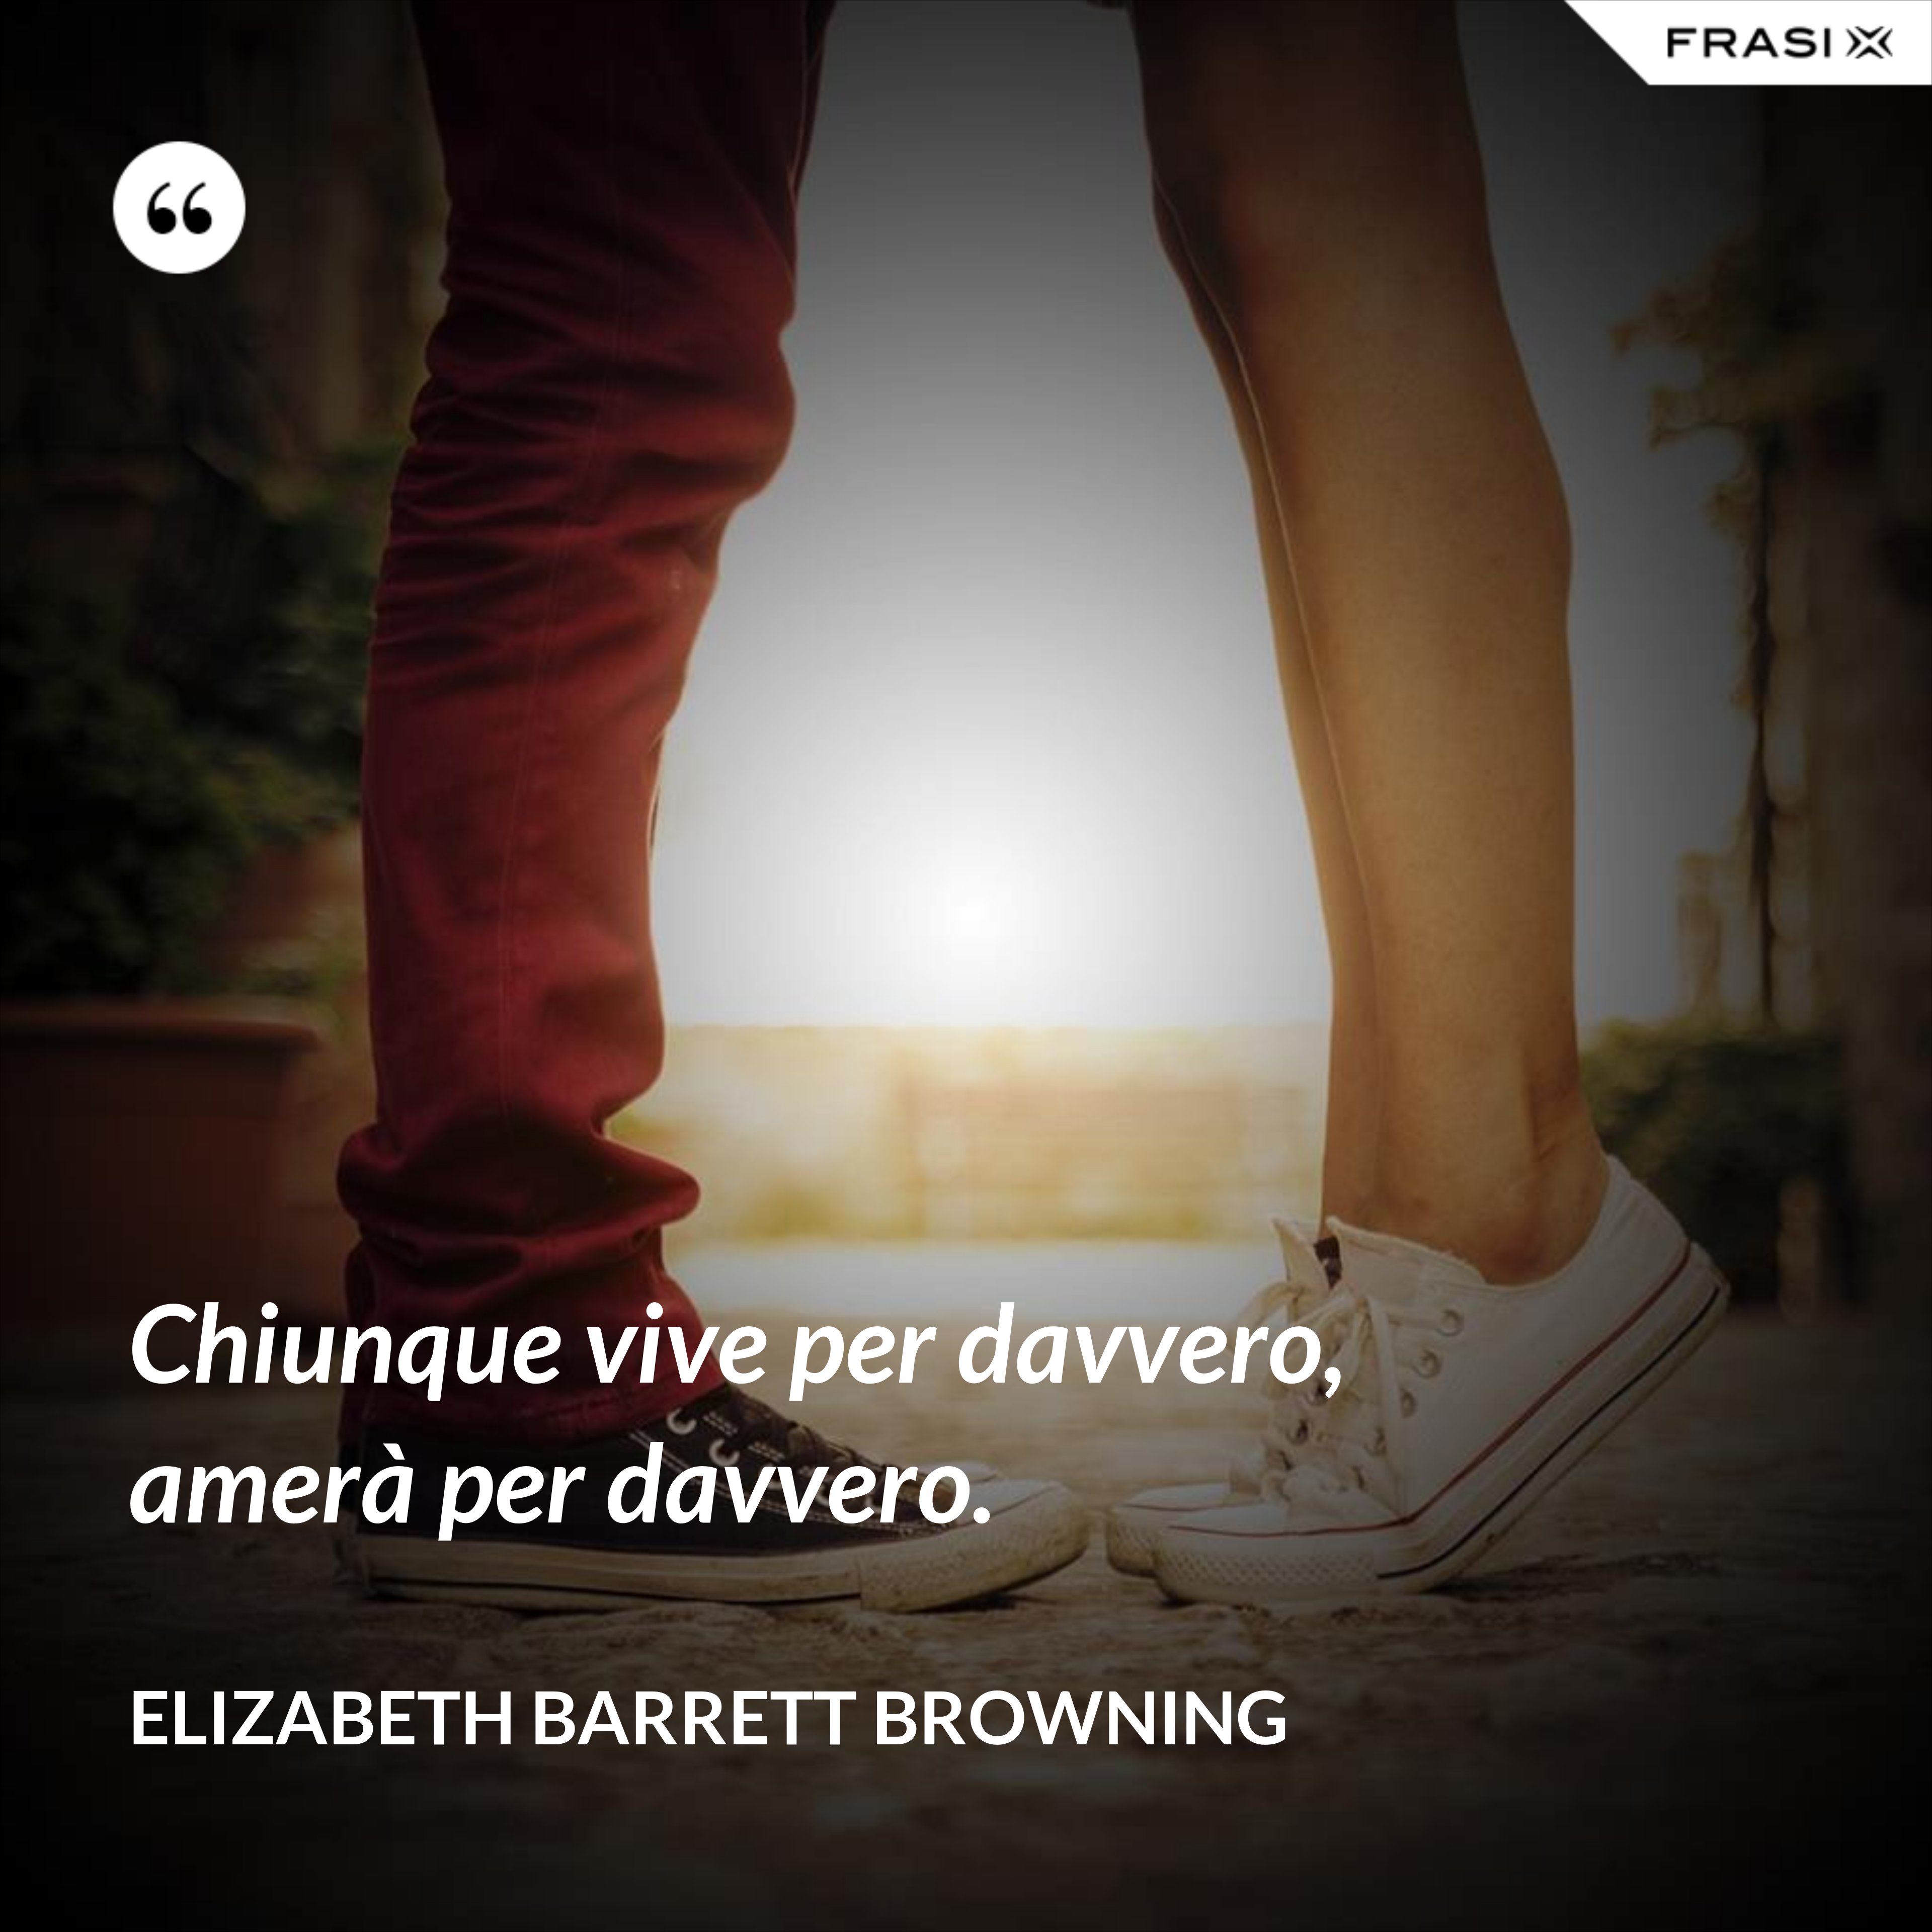 Chiunque vive per davvero, amerà per davvero. - Elizabeth Barrett Browning